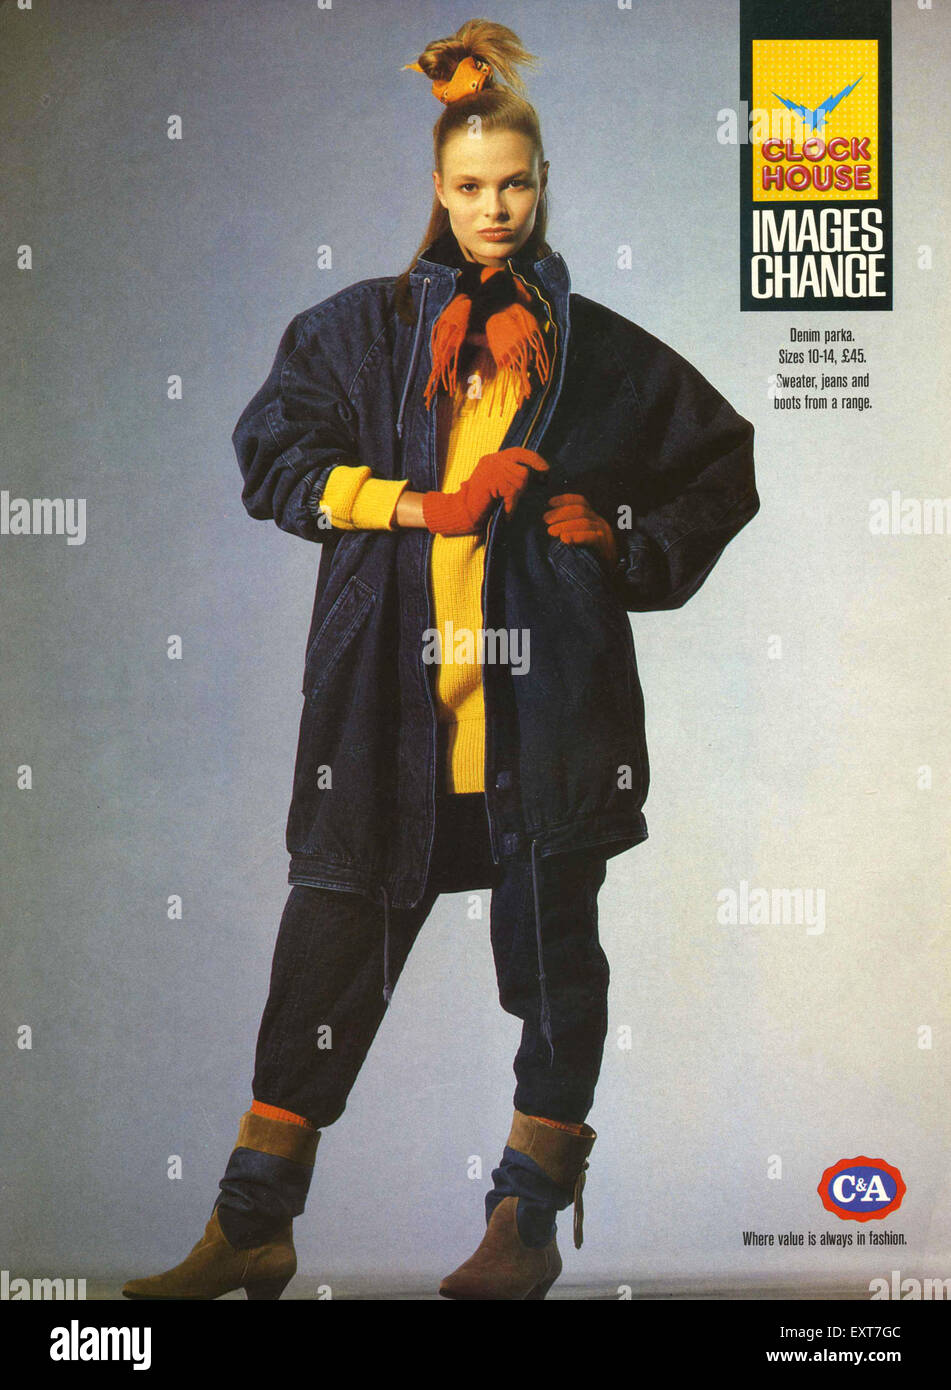 1980s UK C&A Magazine Advert Stock Photo